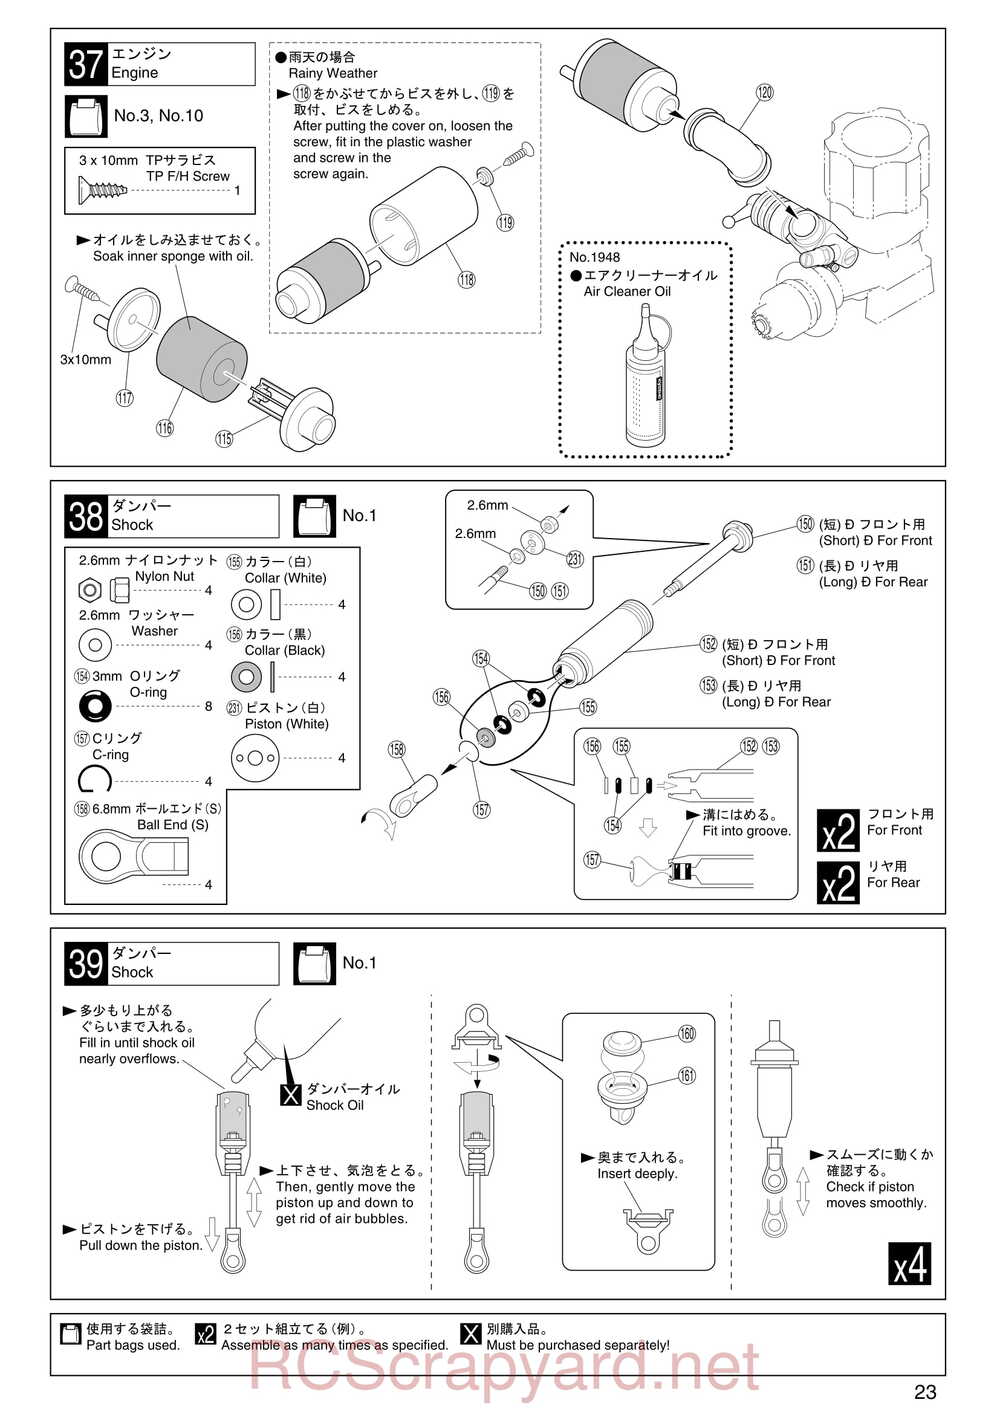 Kyosho - 31191 - Inferno-MP-7-5 Yuichi - Manual - Page 23